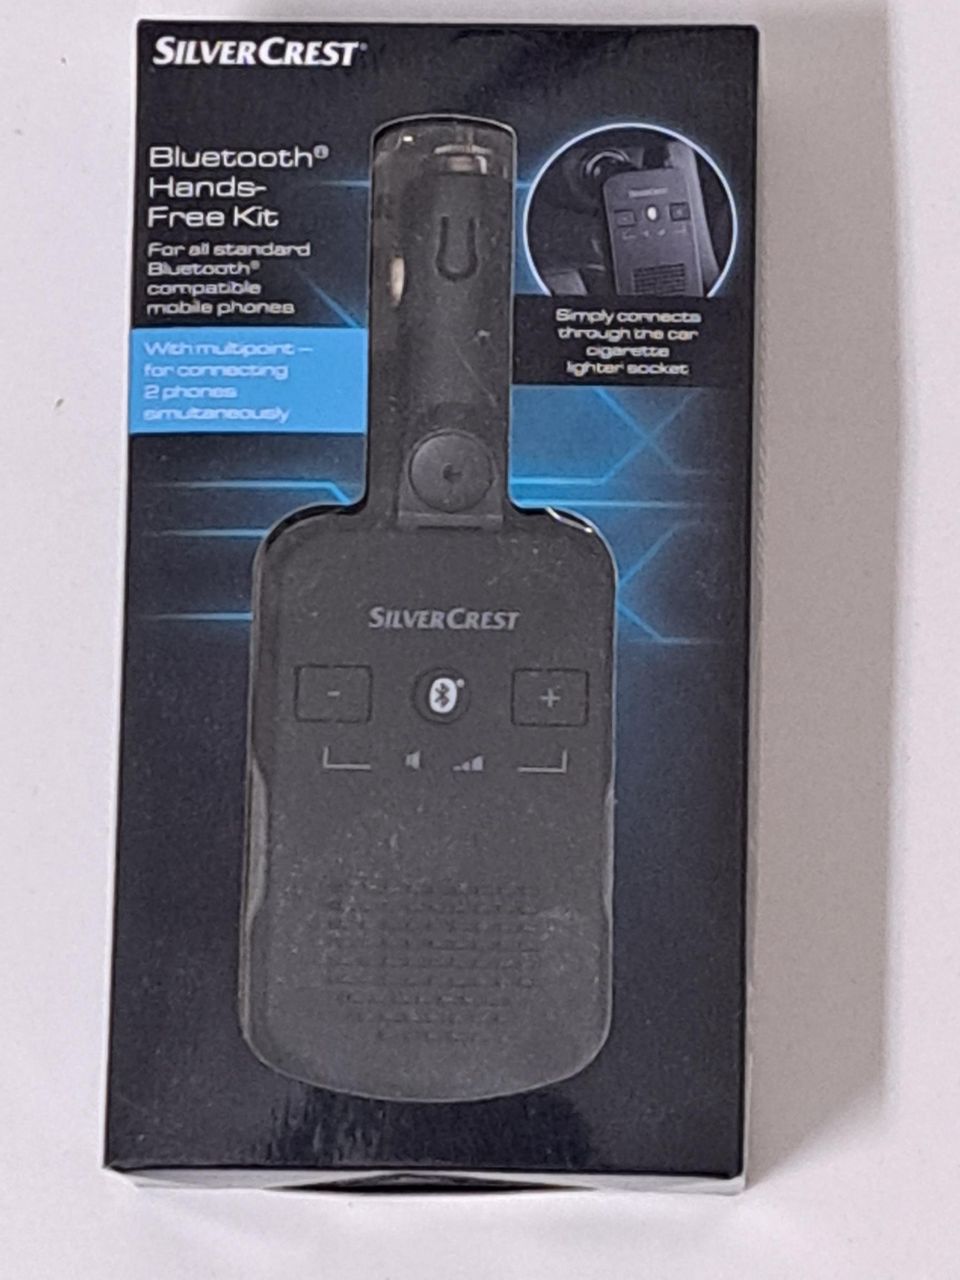 Bluetooth hands-free kit